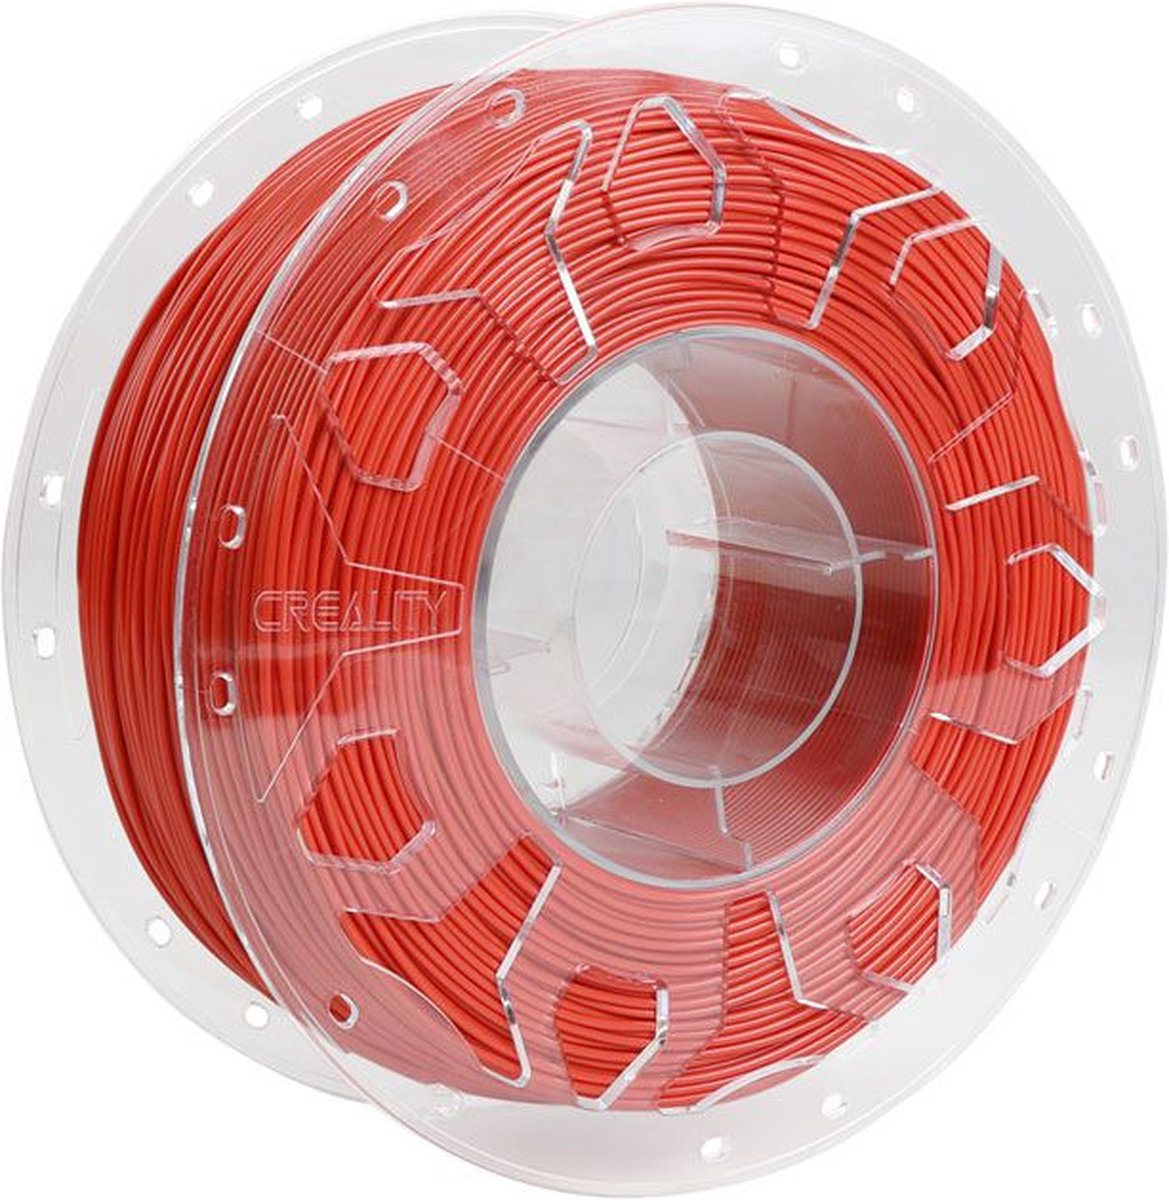 Creality PLA filament 1.75 mm rood 1kg